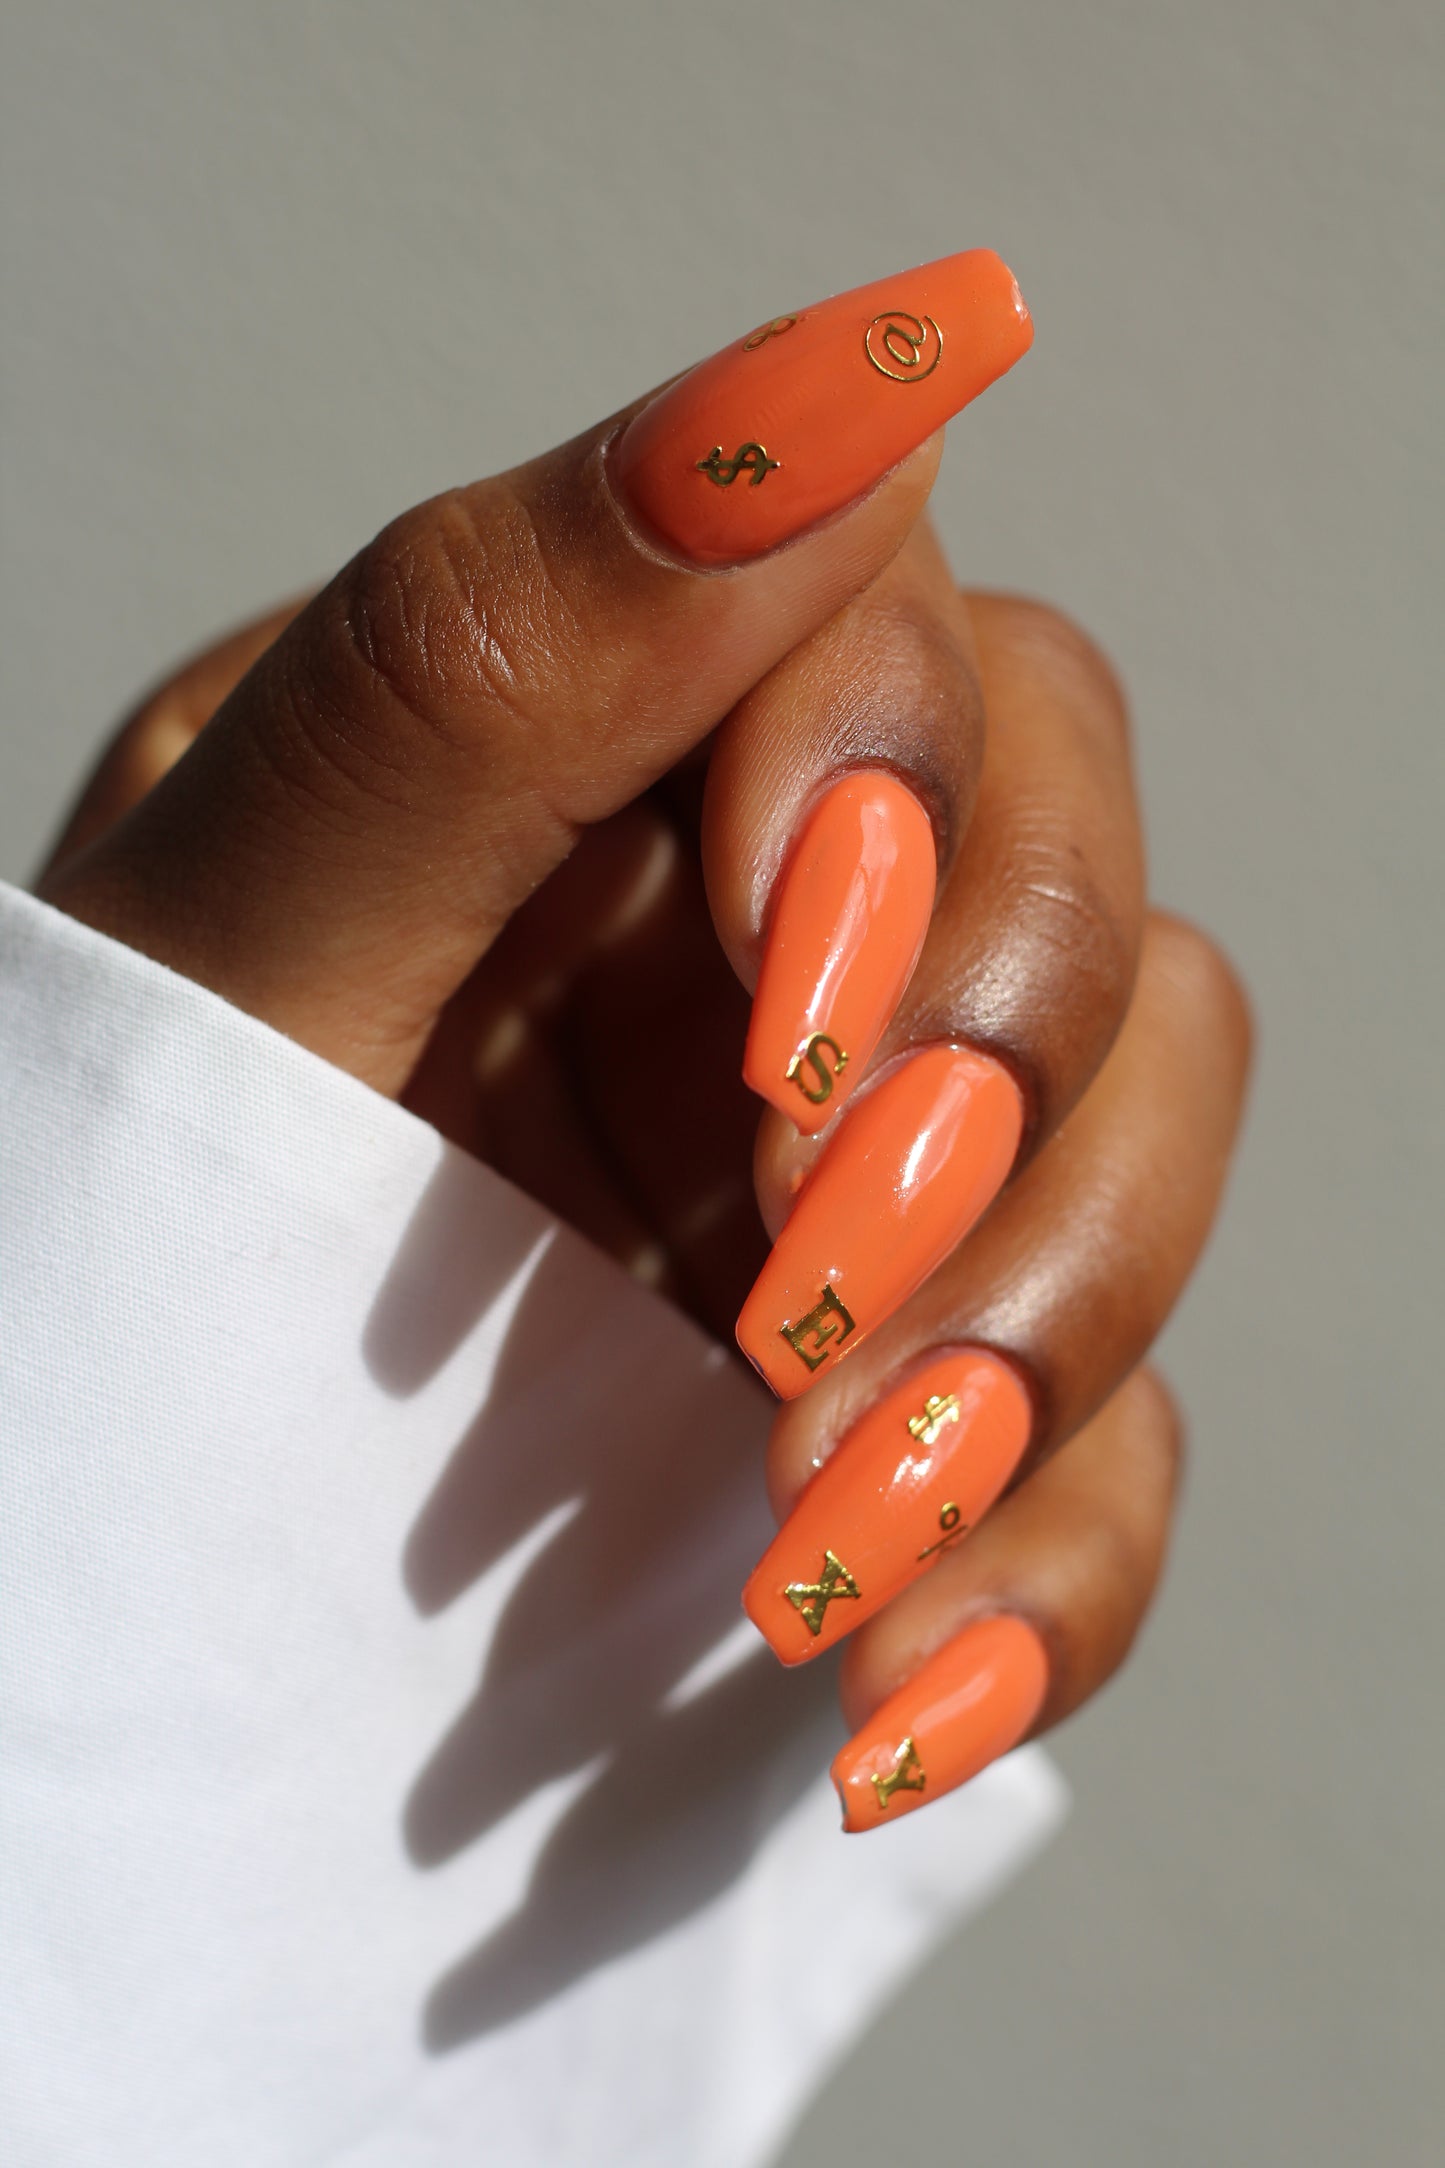 ABCS nail art on orange nails, SEXY